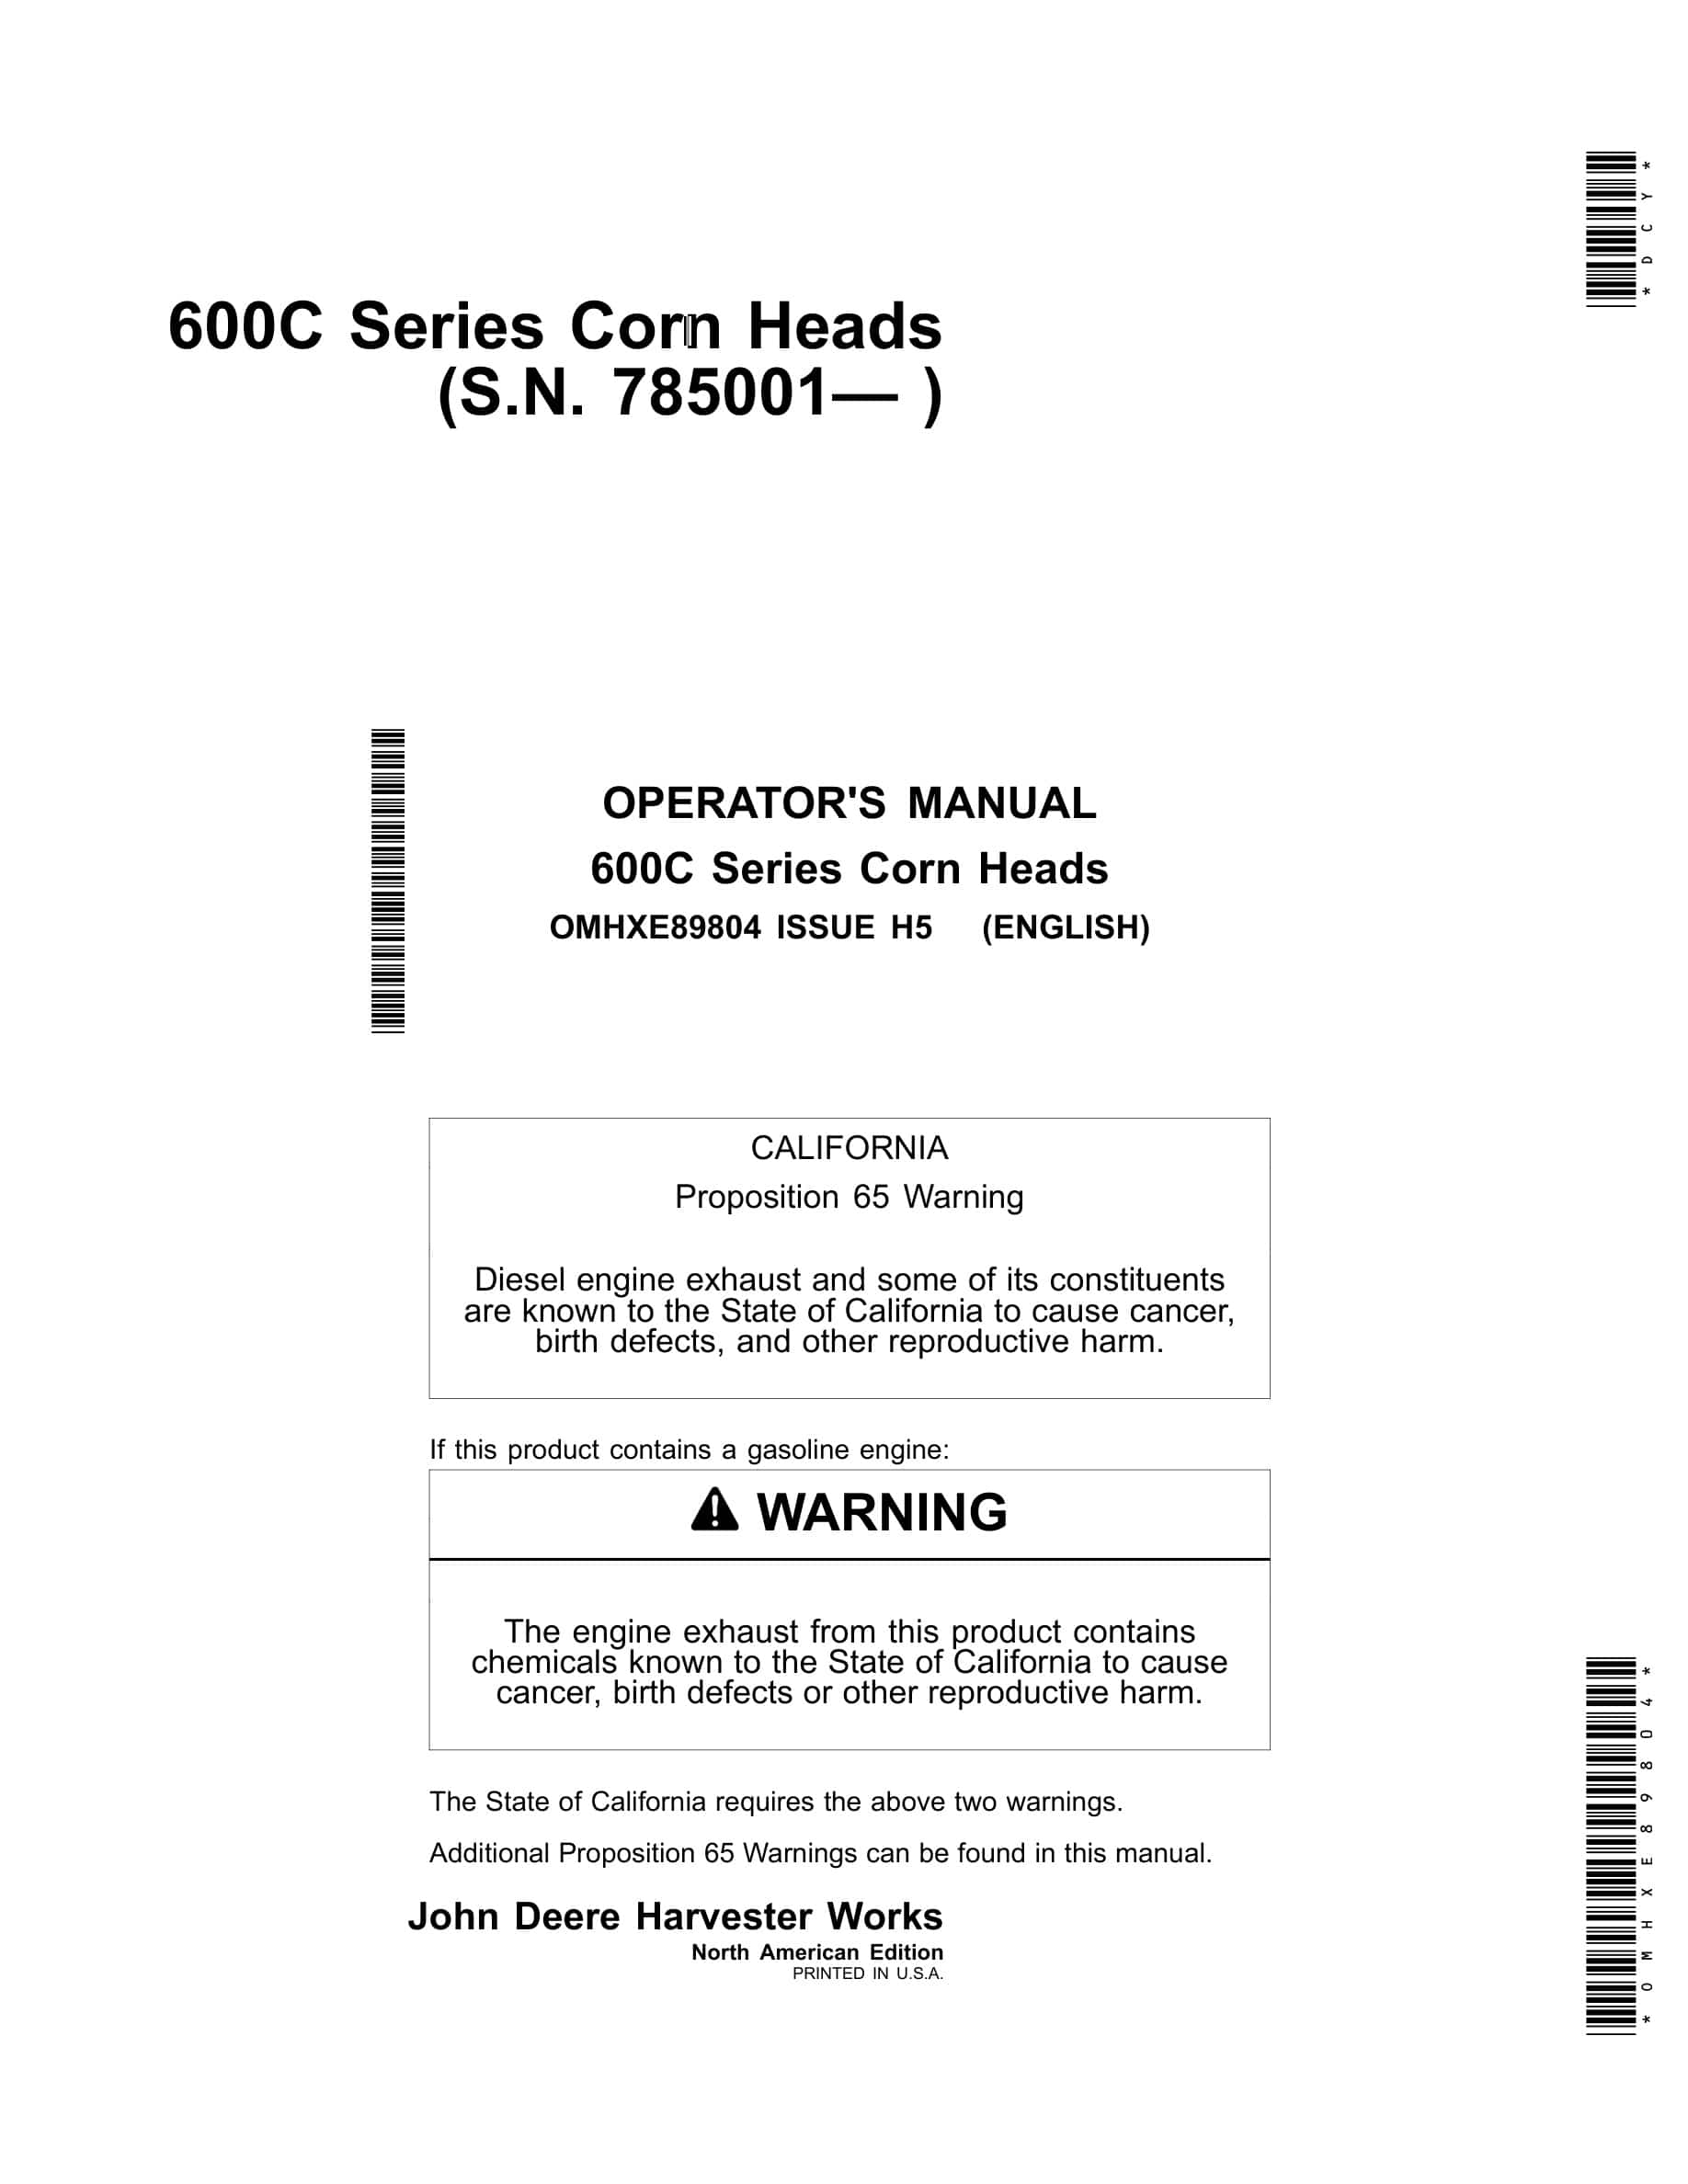 John Deere 600C Series Corn Heads Operator Manual OMHXE89804-1